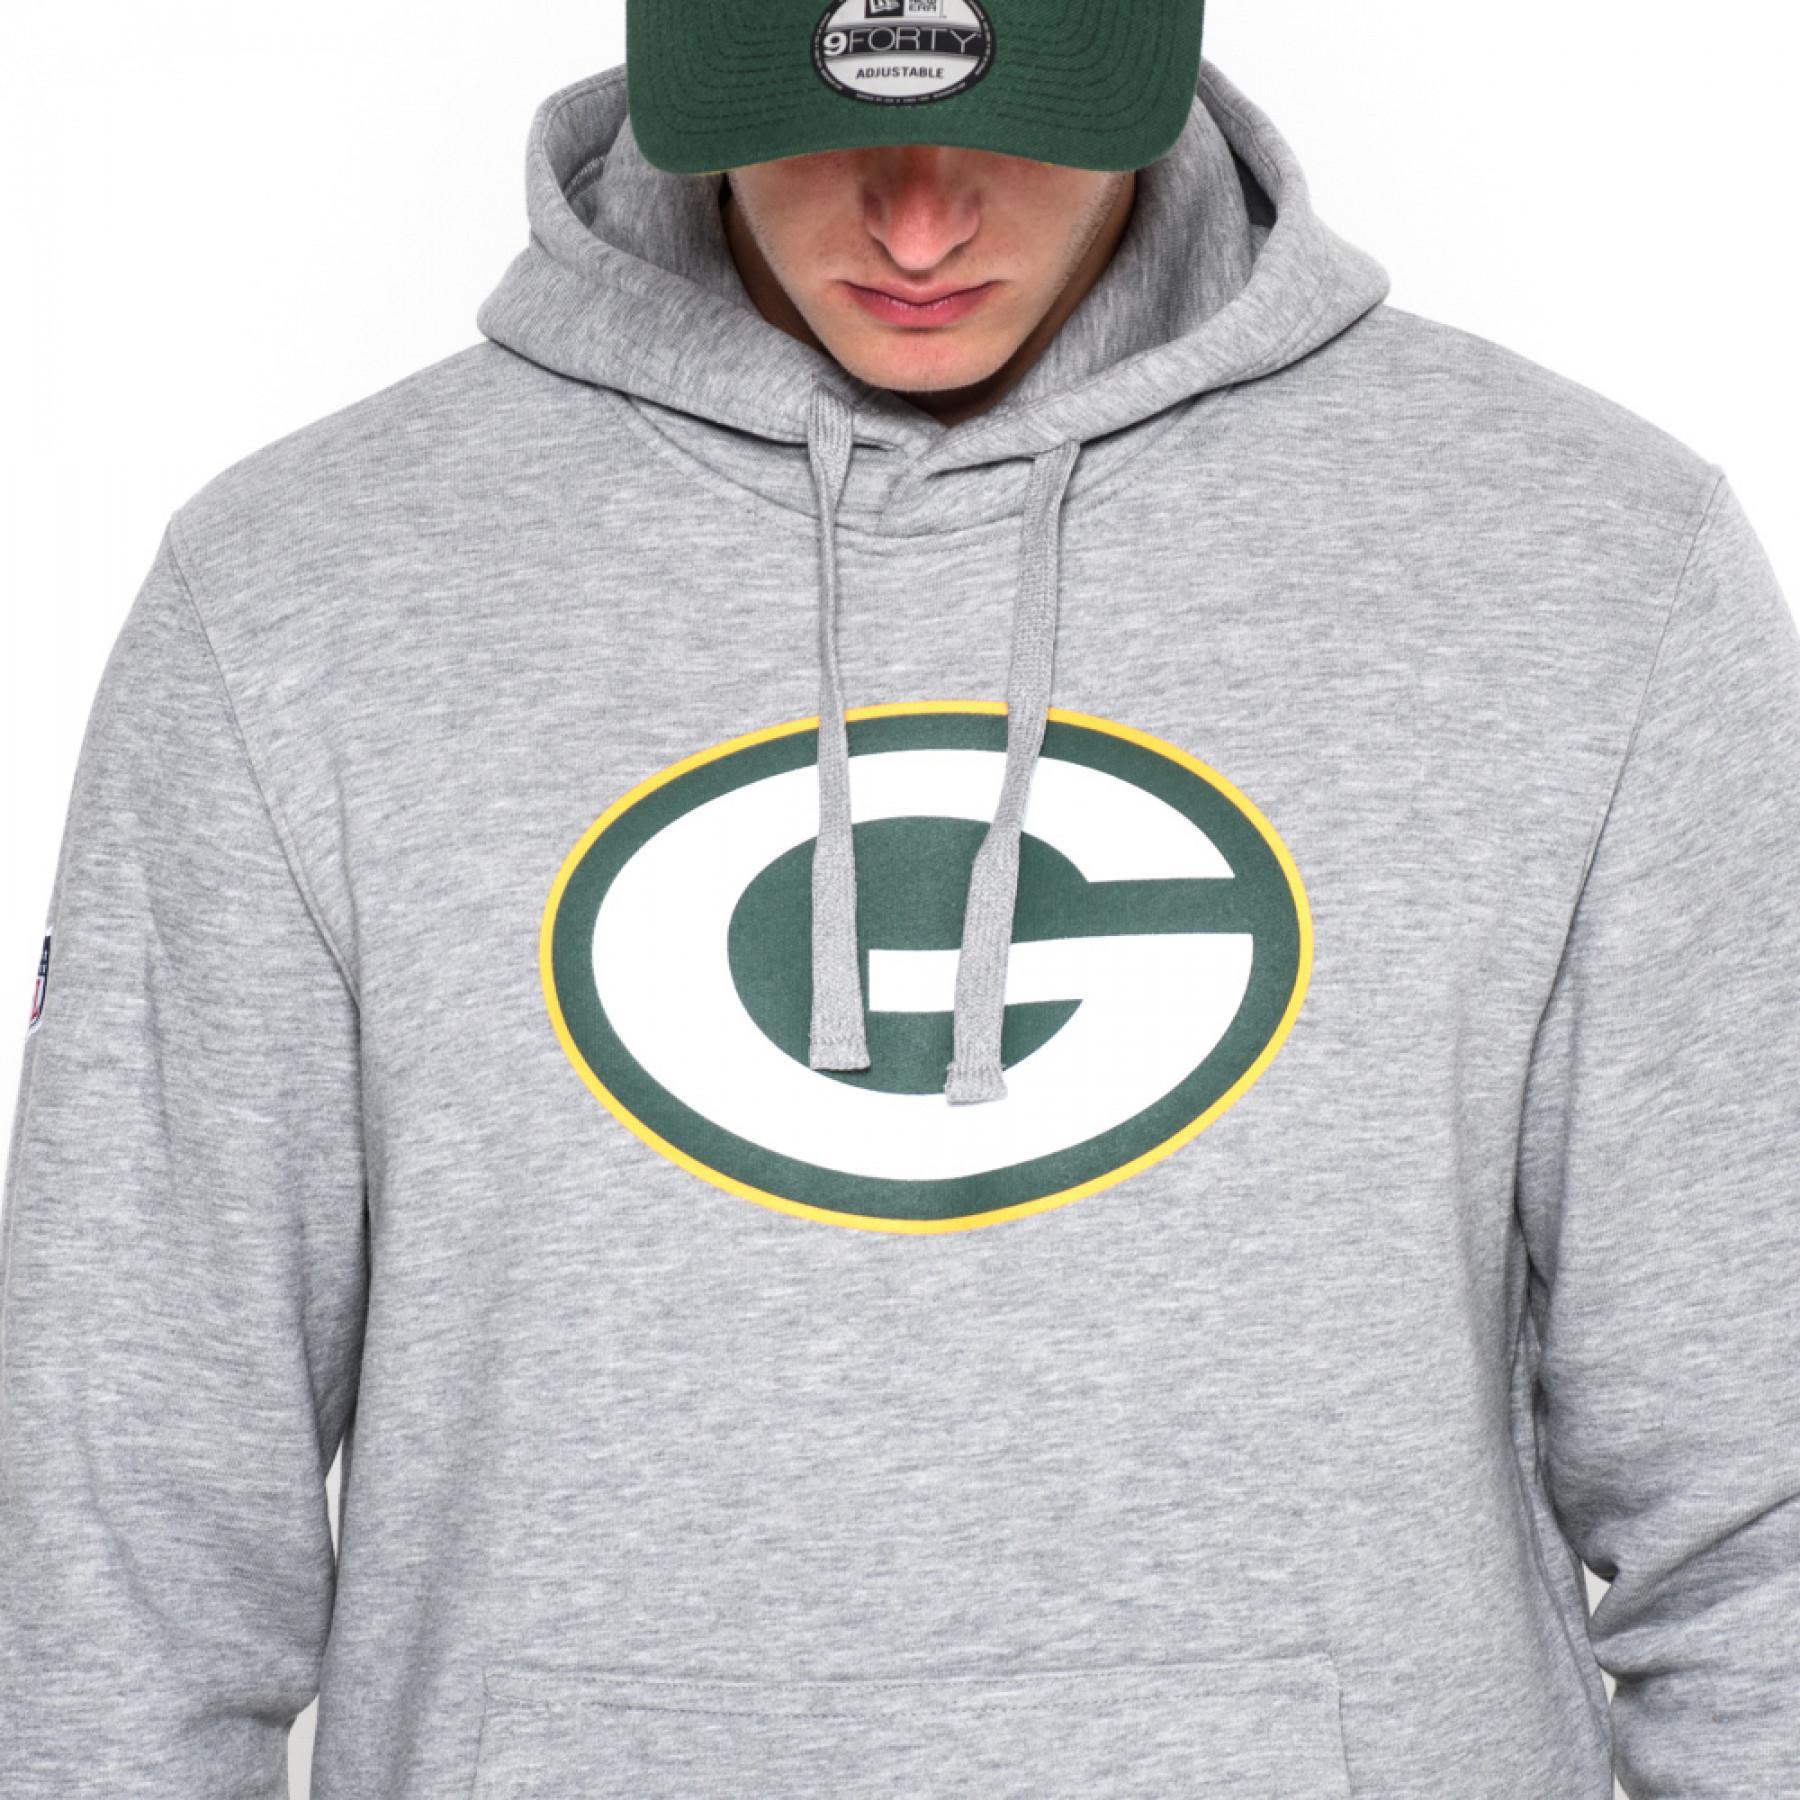 Sweat à capuche New Era avec logo de l'équipe Green Bay Packers